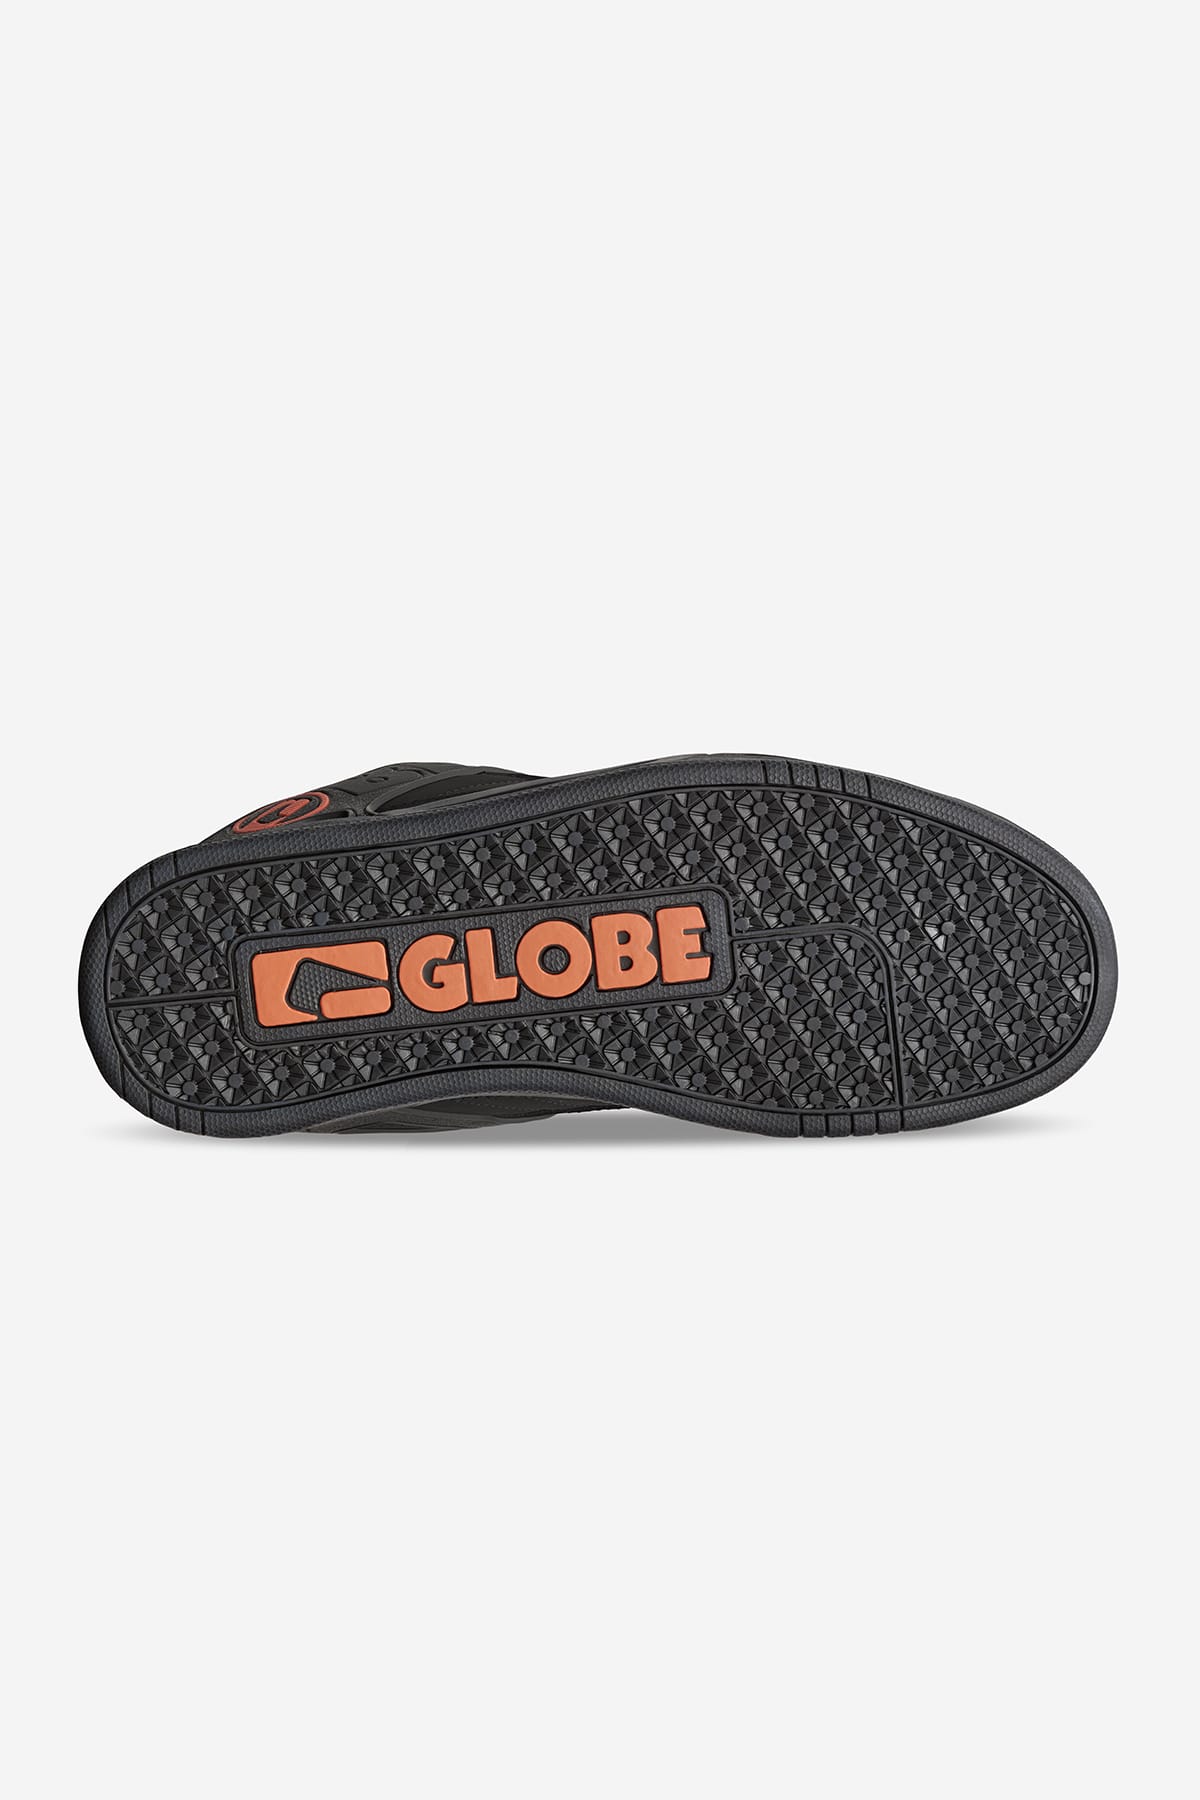 Globe - Tilt - Black/Black/Bronze - skateboard Sapatos